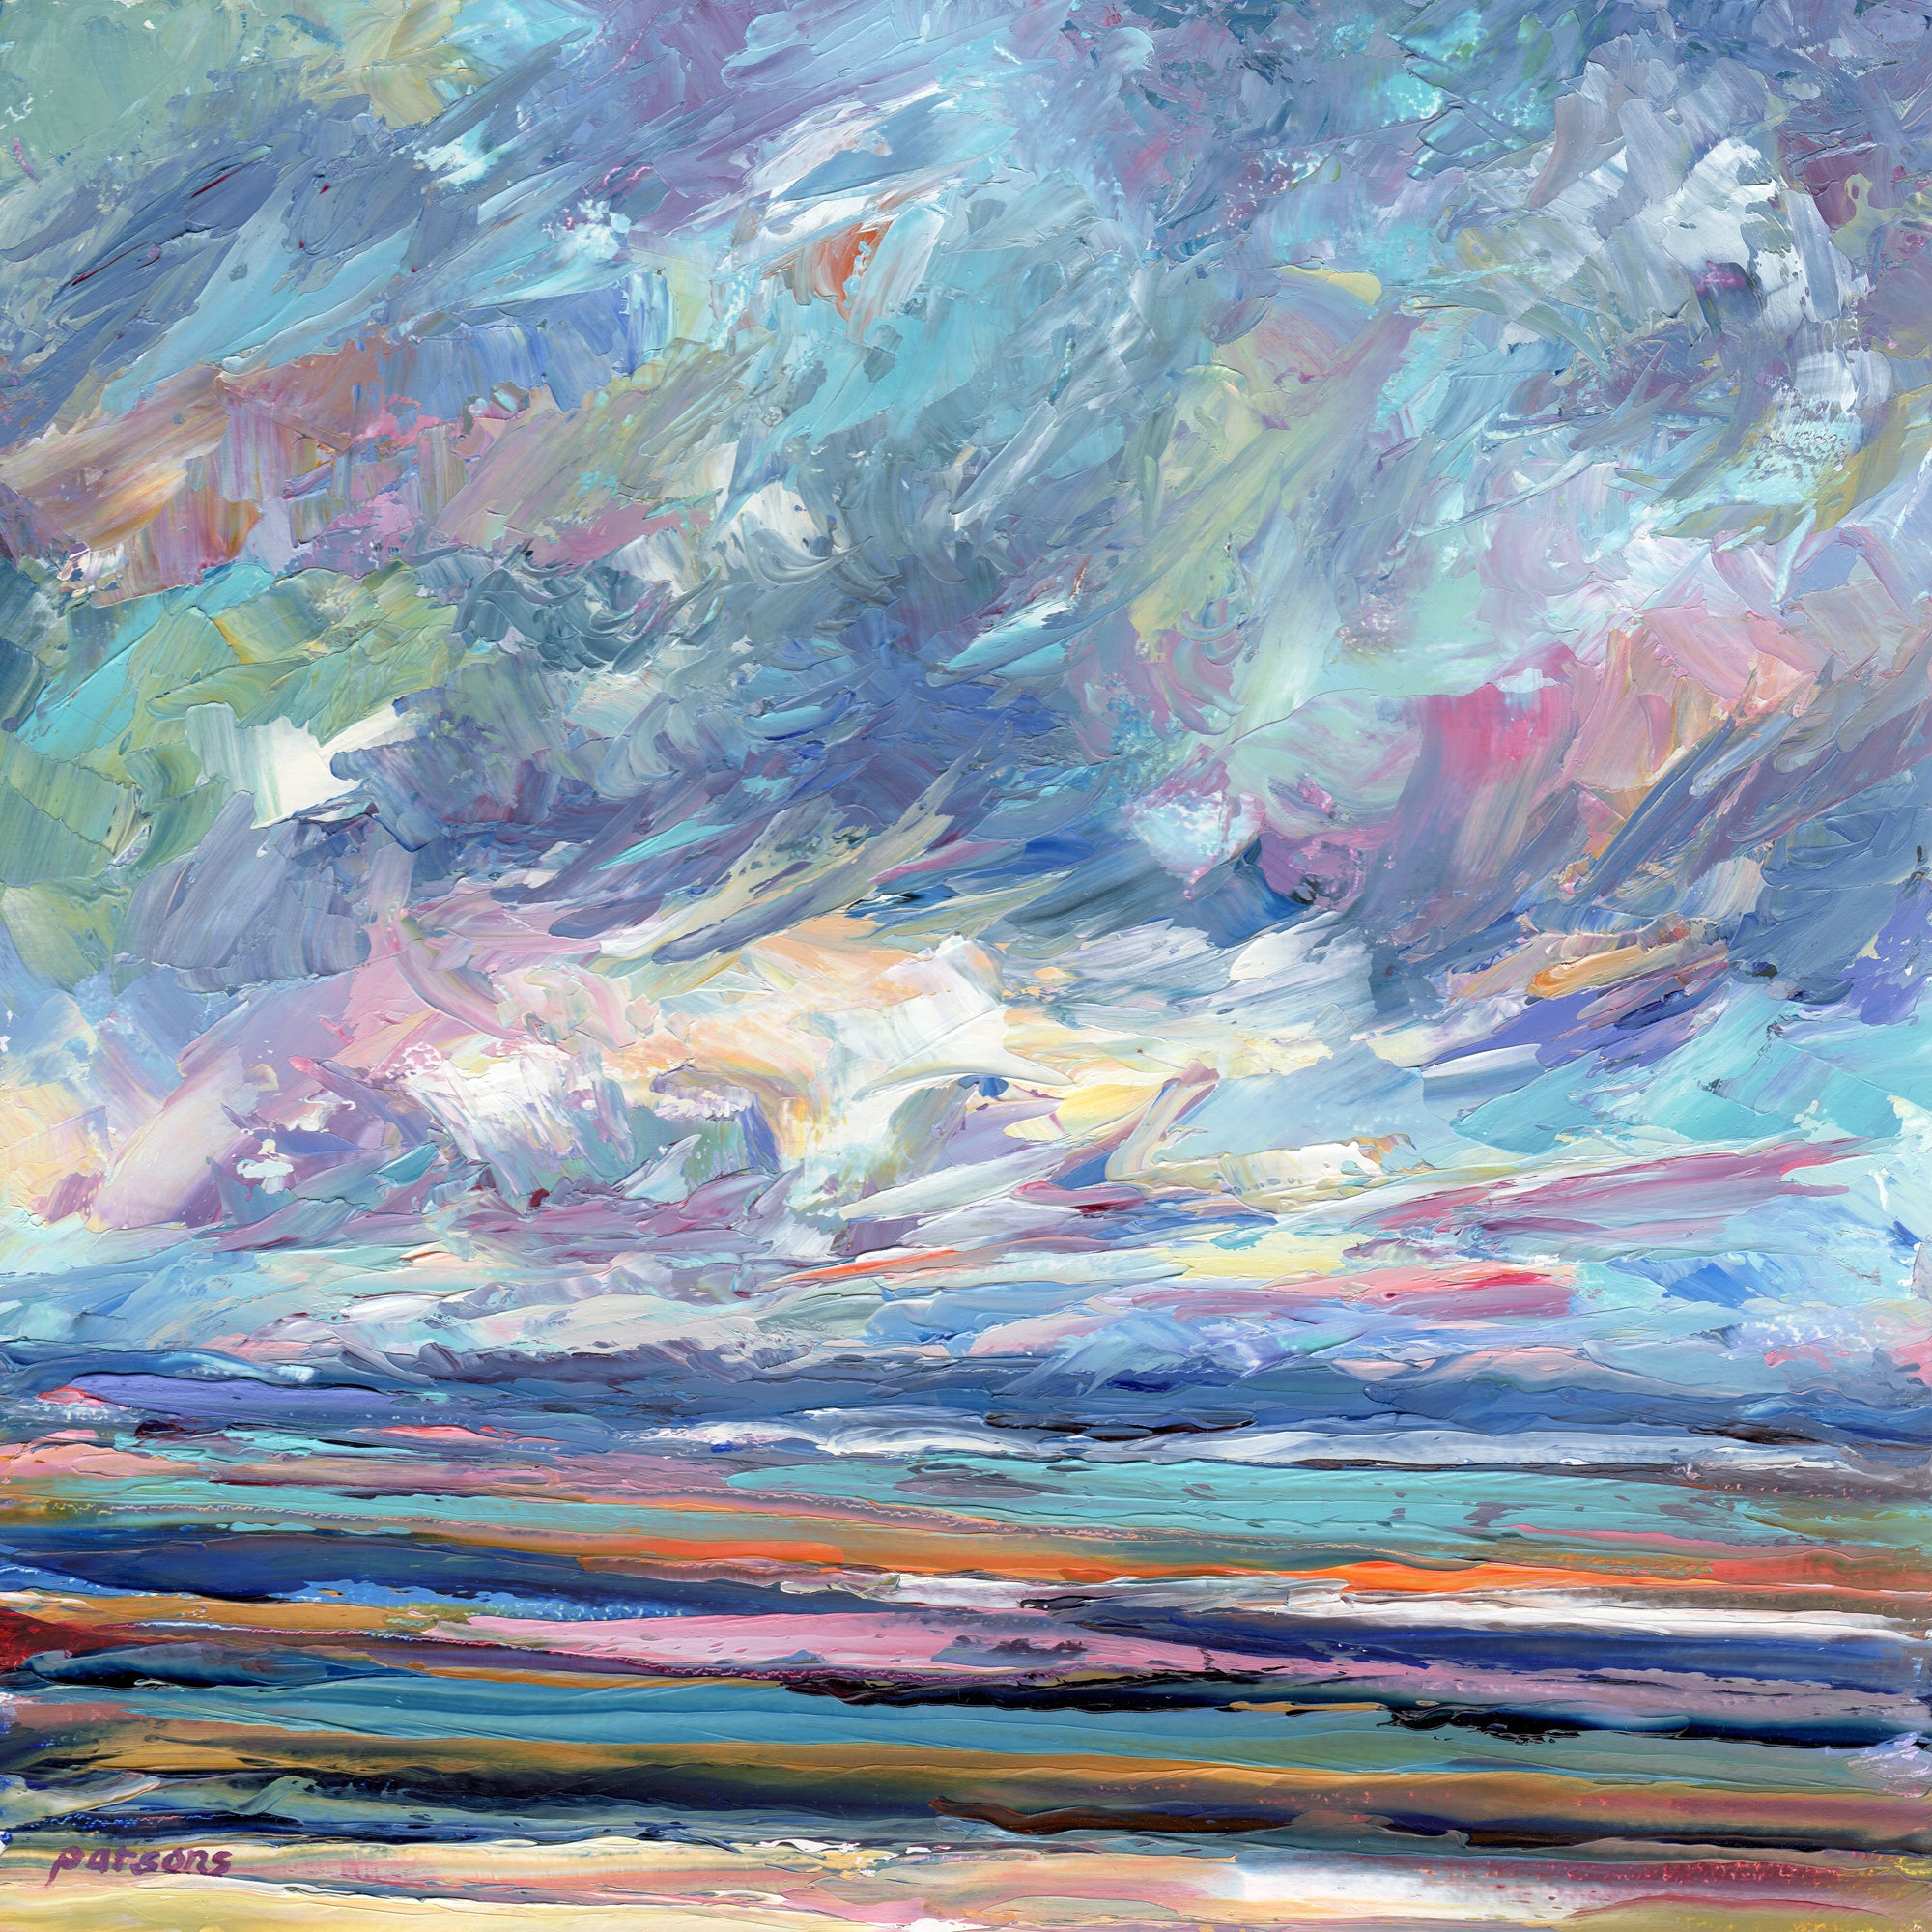 Tidal Flats, Cape Cod, Massachusetts. Impressionist seascape. Palette knife oil on cradled birch panel.